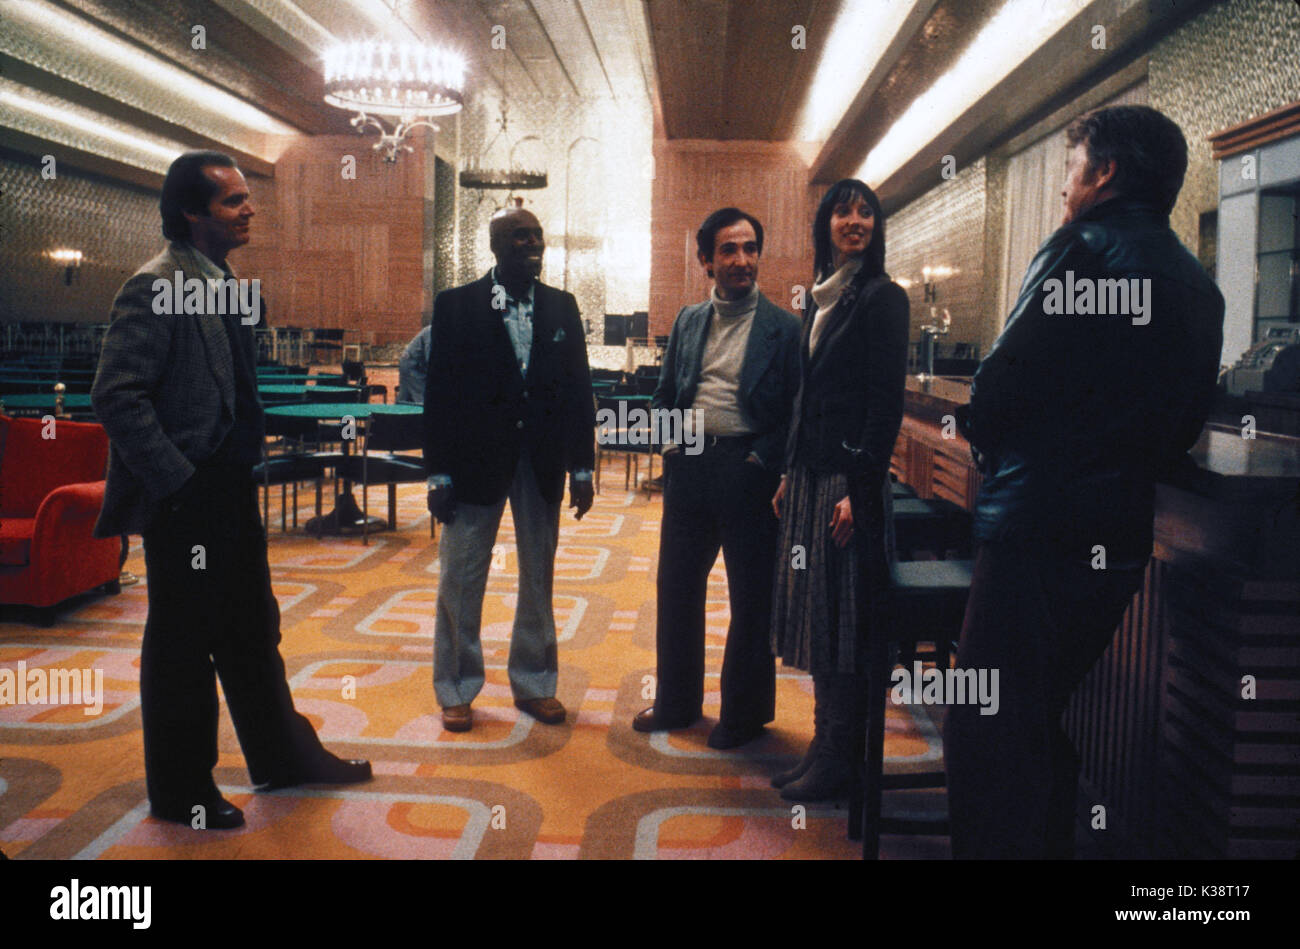 Il SHINING Jack Nicholson, SCATMAN CROTHERS , SHELLEY DUVALL, [?] Data: 1980 Foto Stock